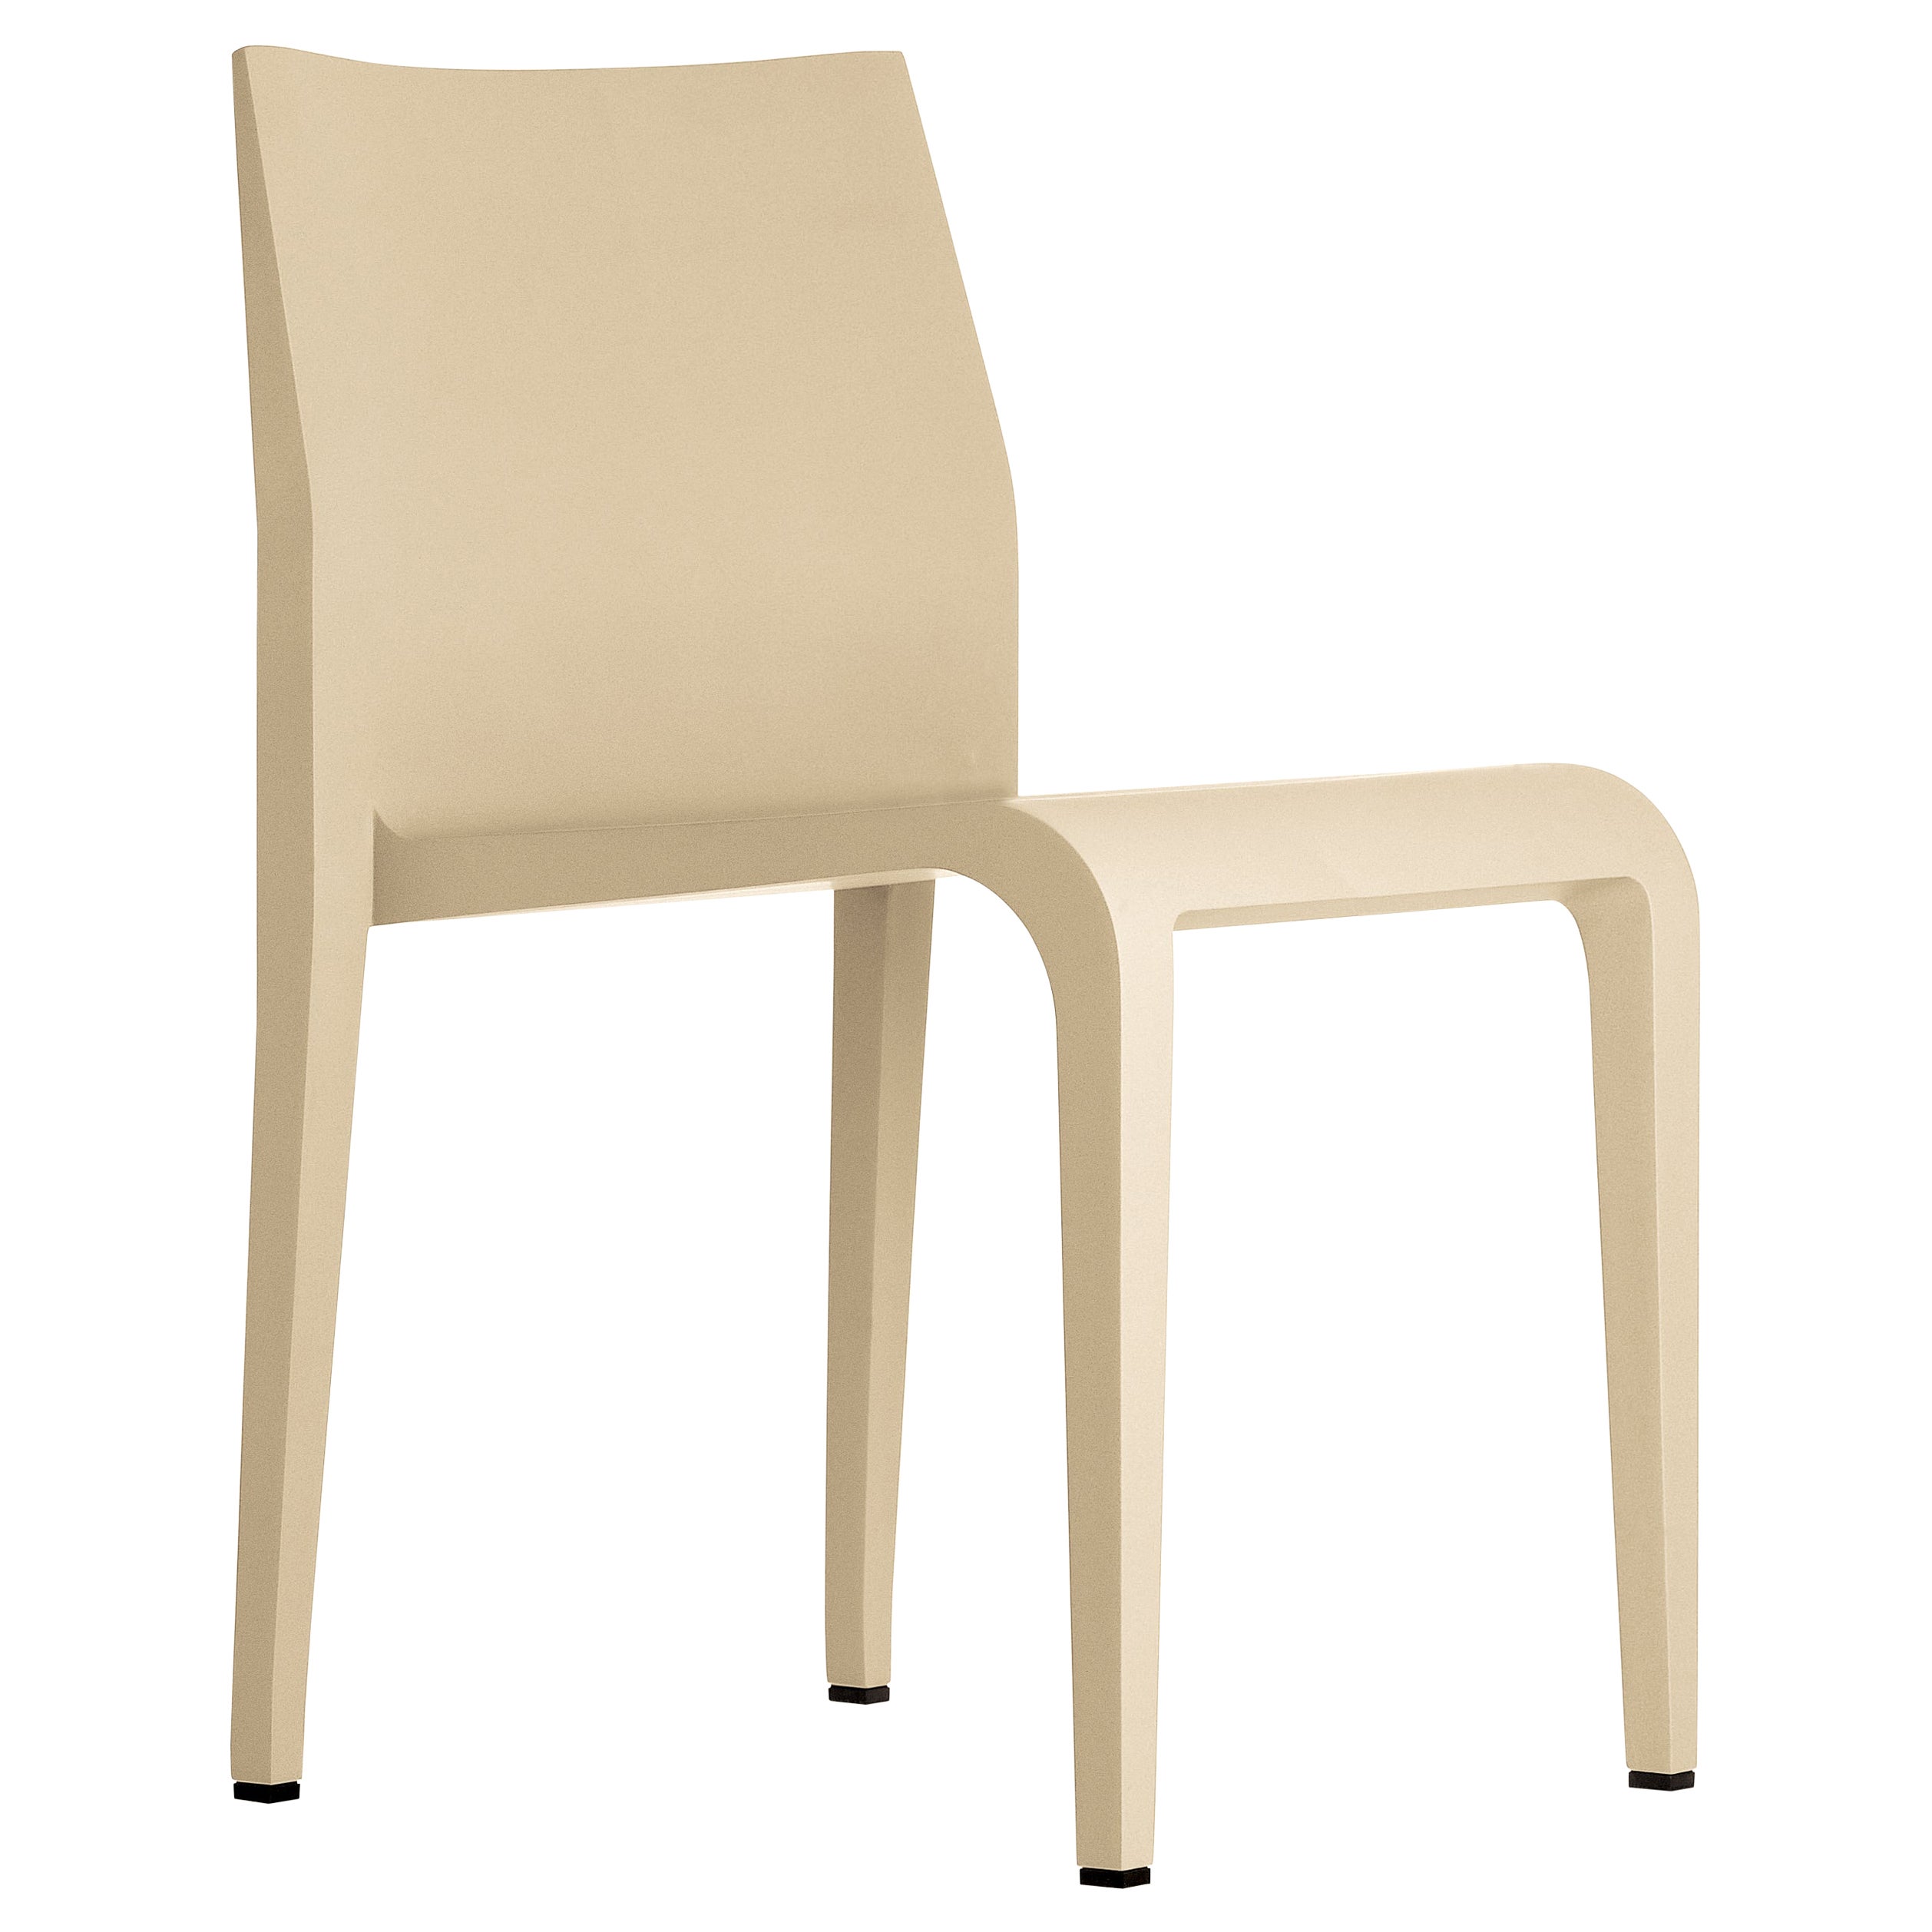 Alias 316 Laleggera Chair+ in Natural Maple Wood Frame by Riccardo Blumer For Sale